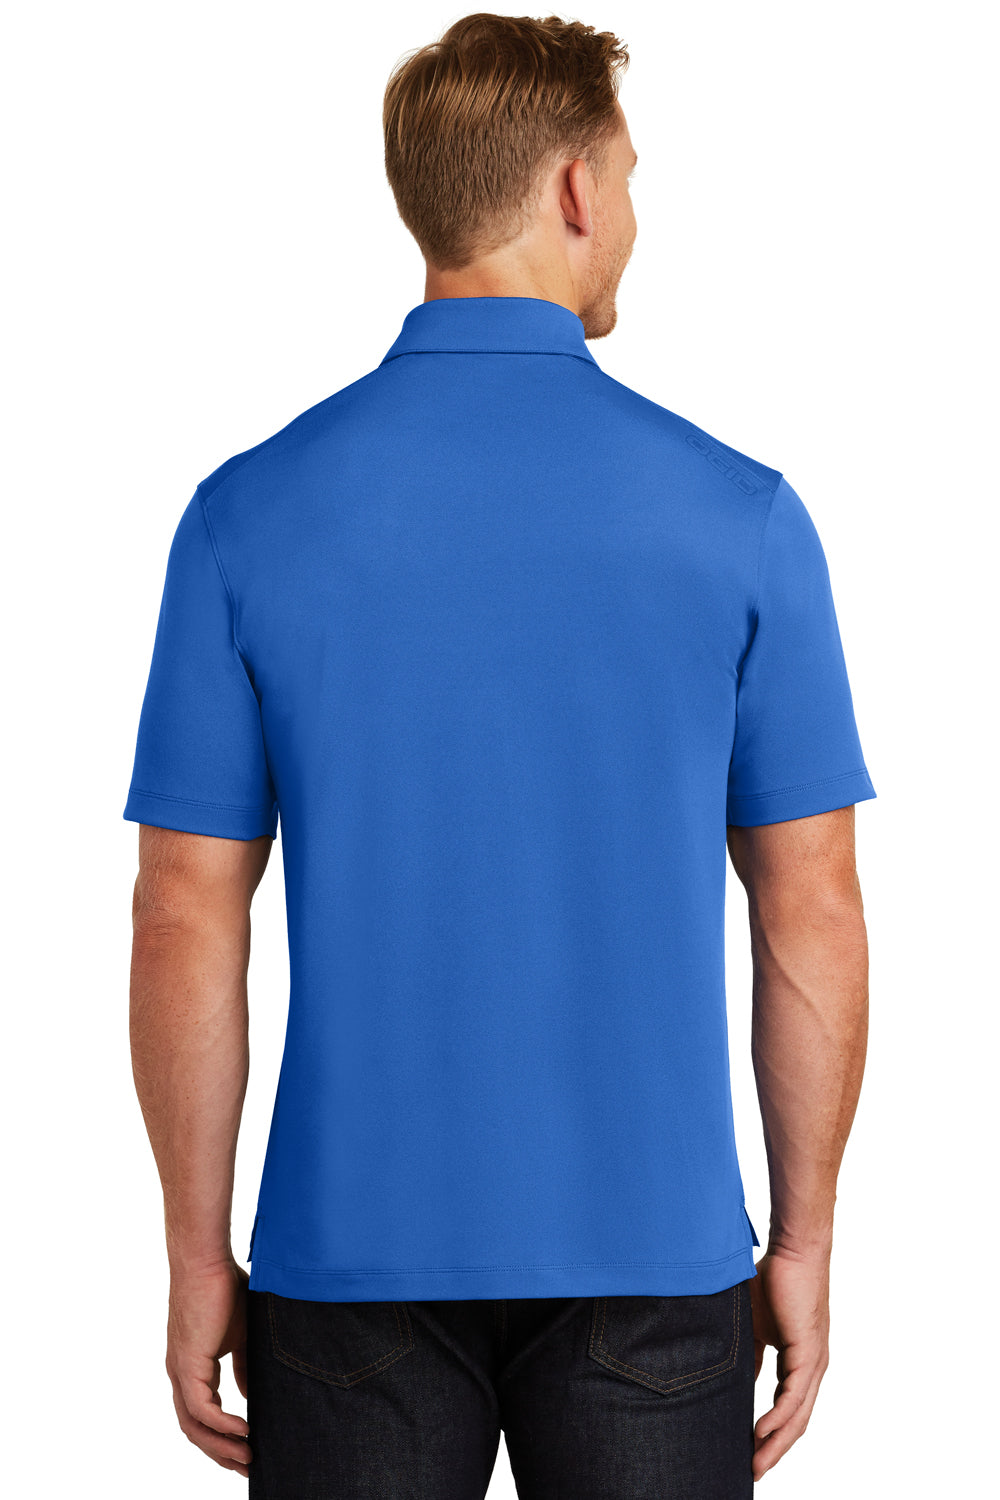 Ogio OG131 Mens Fuse Moisture Wicking Short Sleeve Polo Shirt w/ Pocket Royal Blue Back